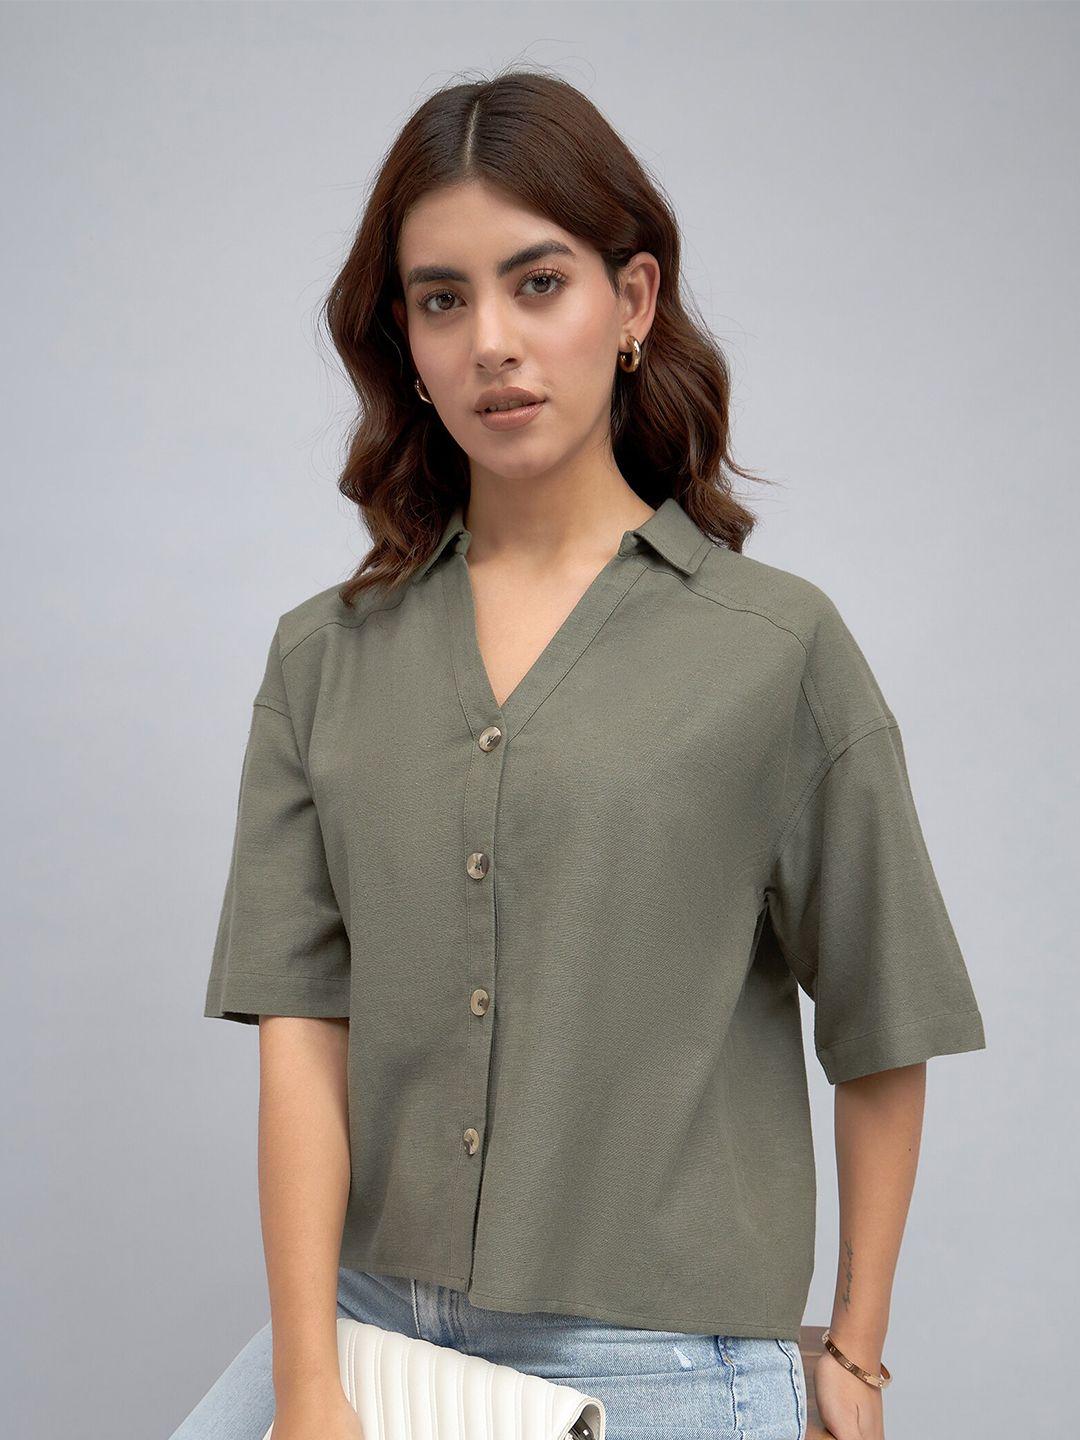 dl-woman-cotton-shirt-style-top